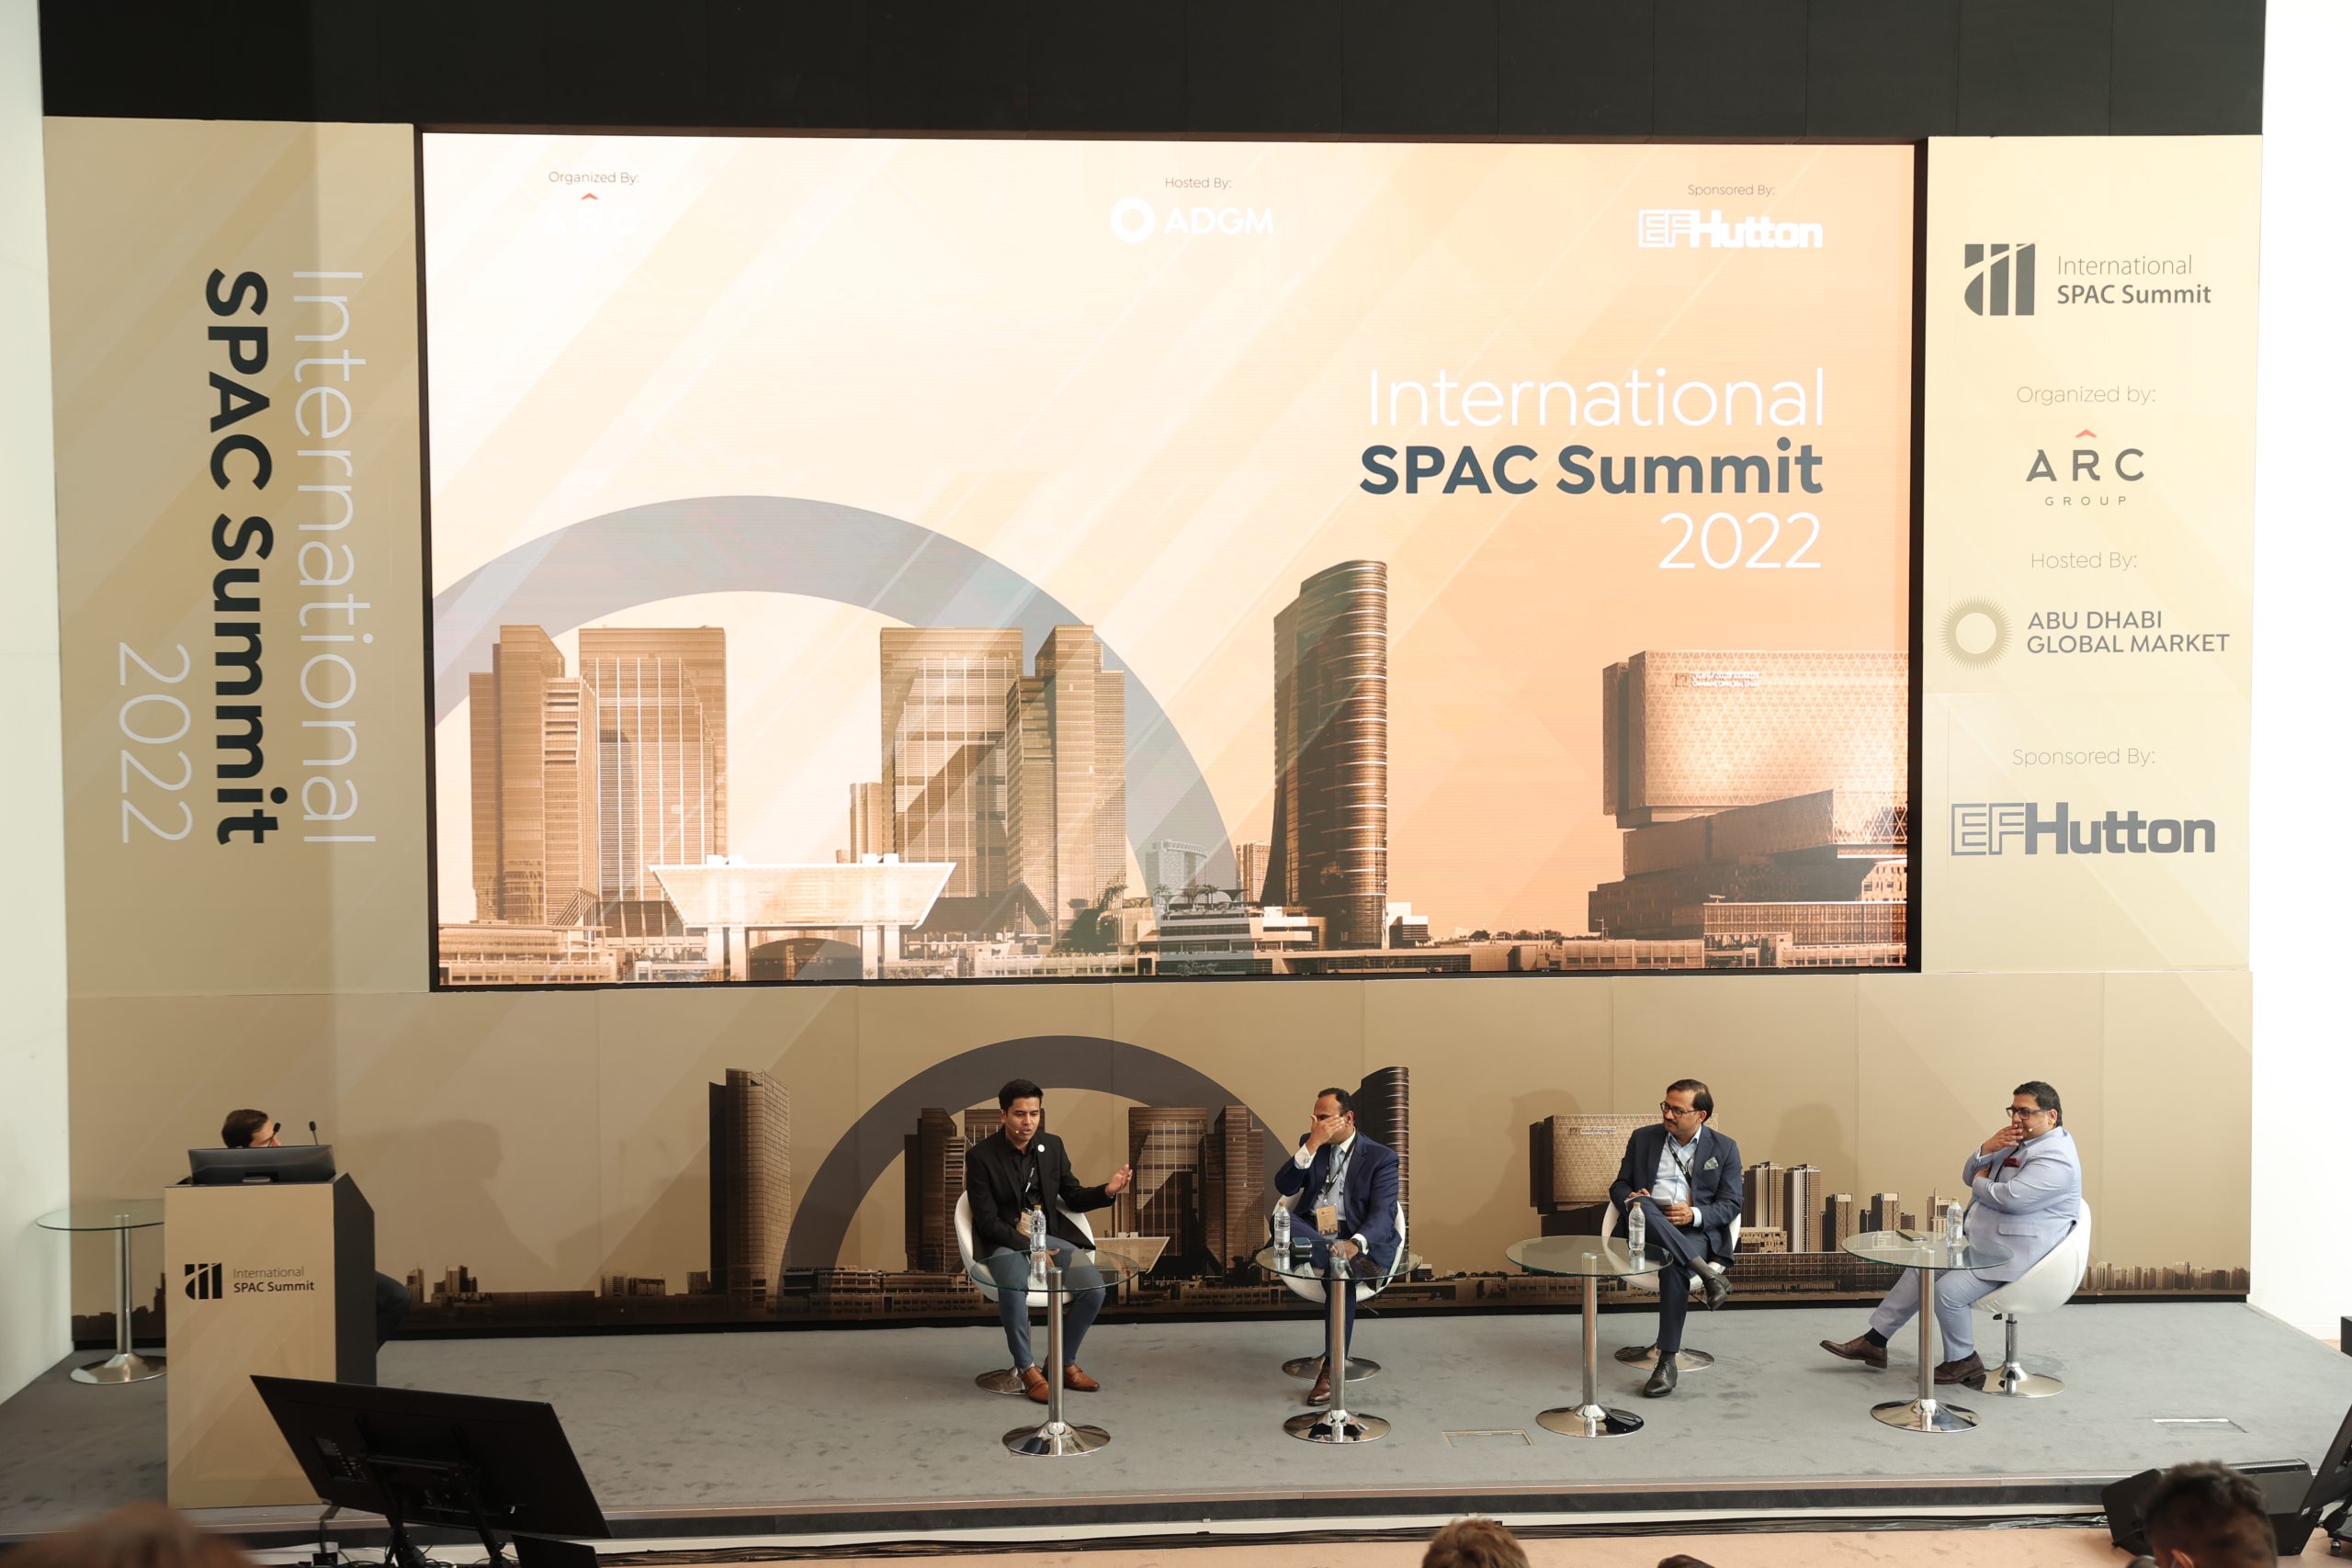 INTERNATIONAL SPAC SUMMIT 2022 came down to Abu Dhabi!